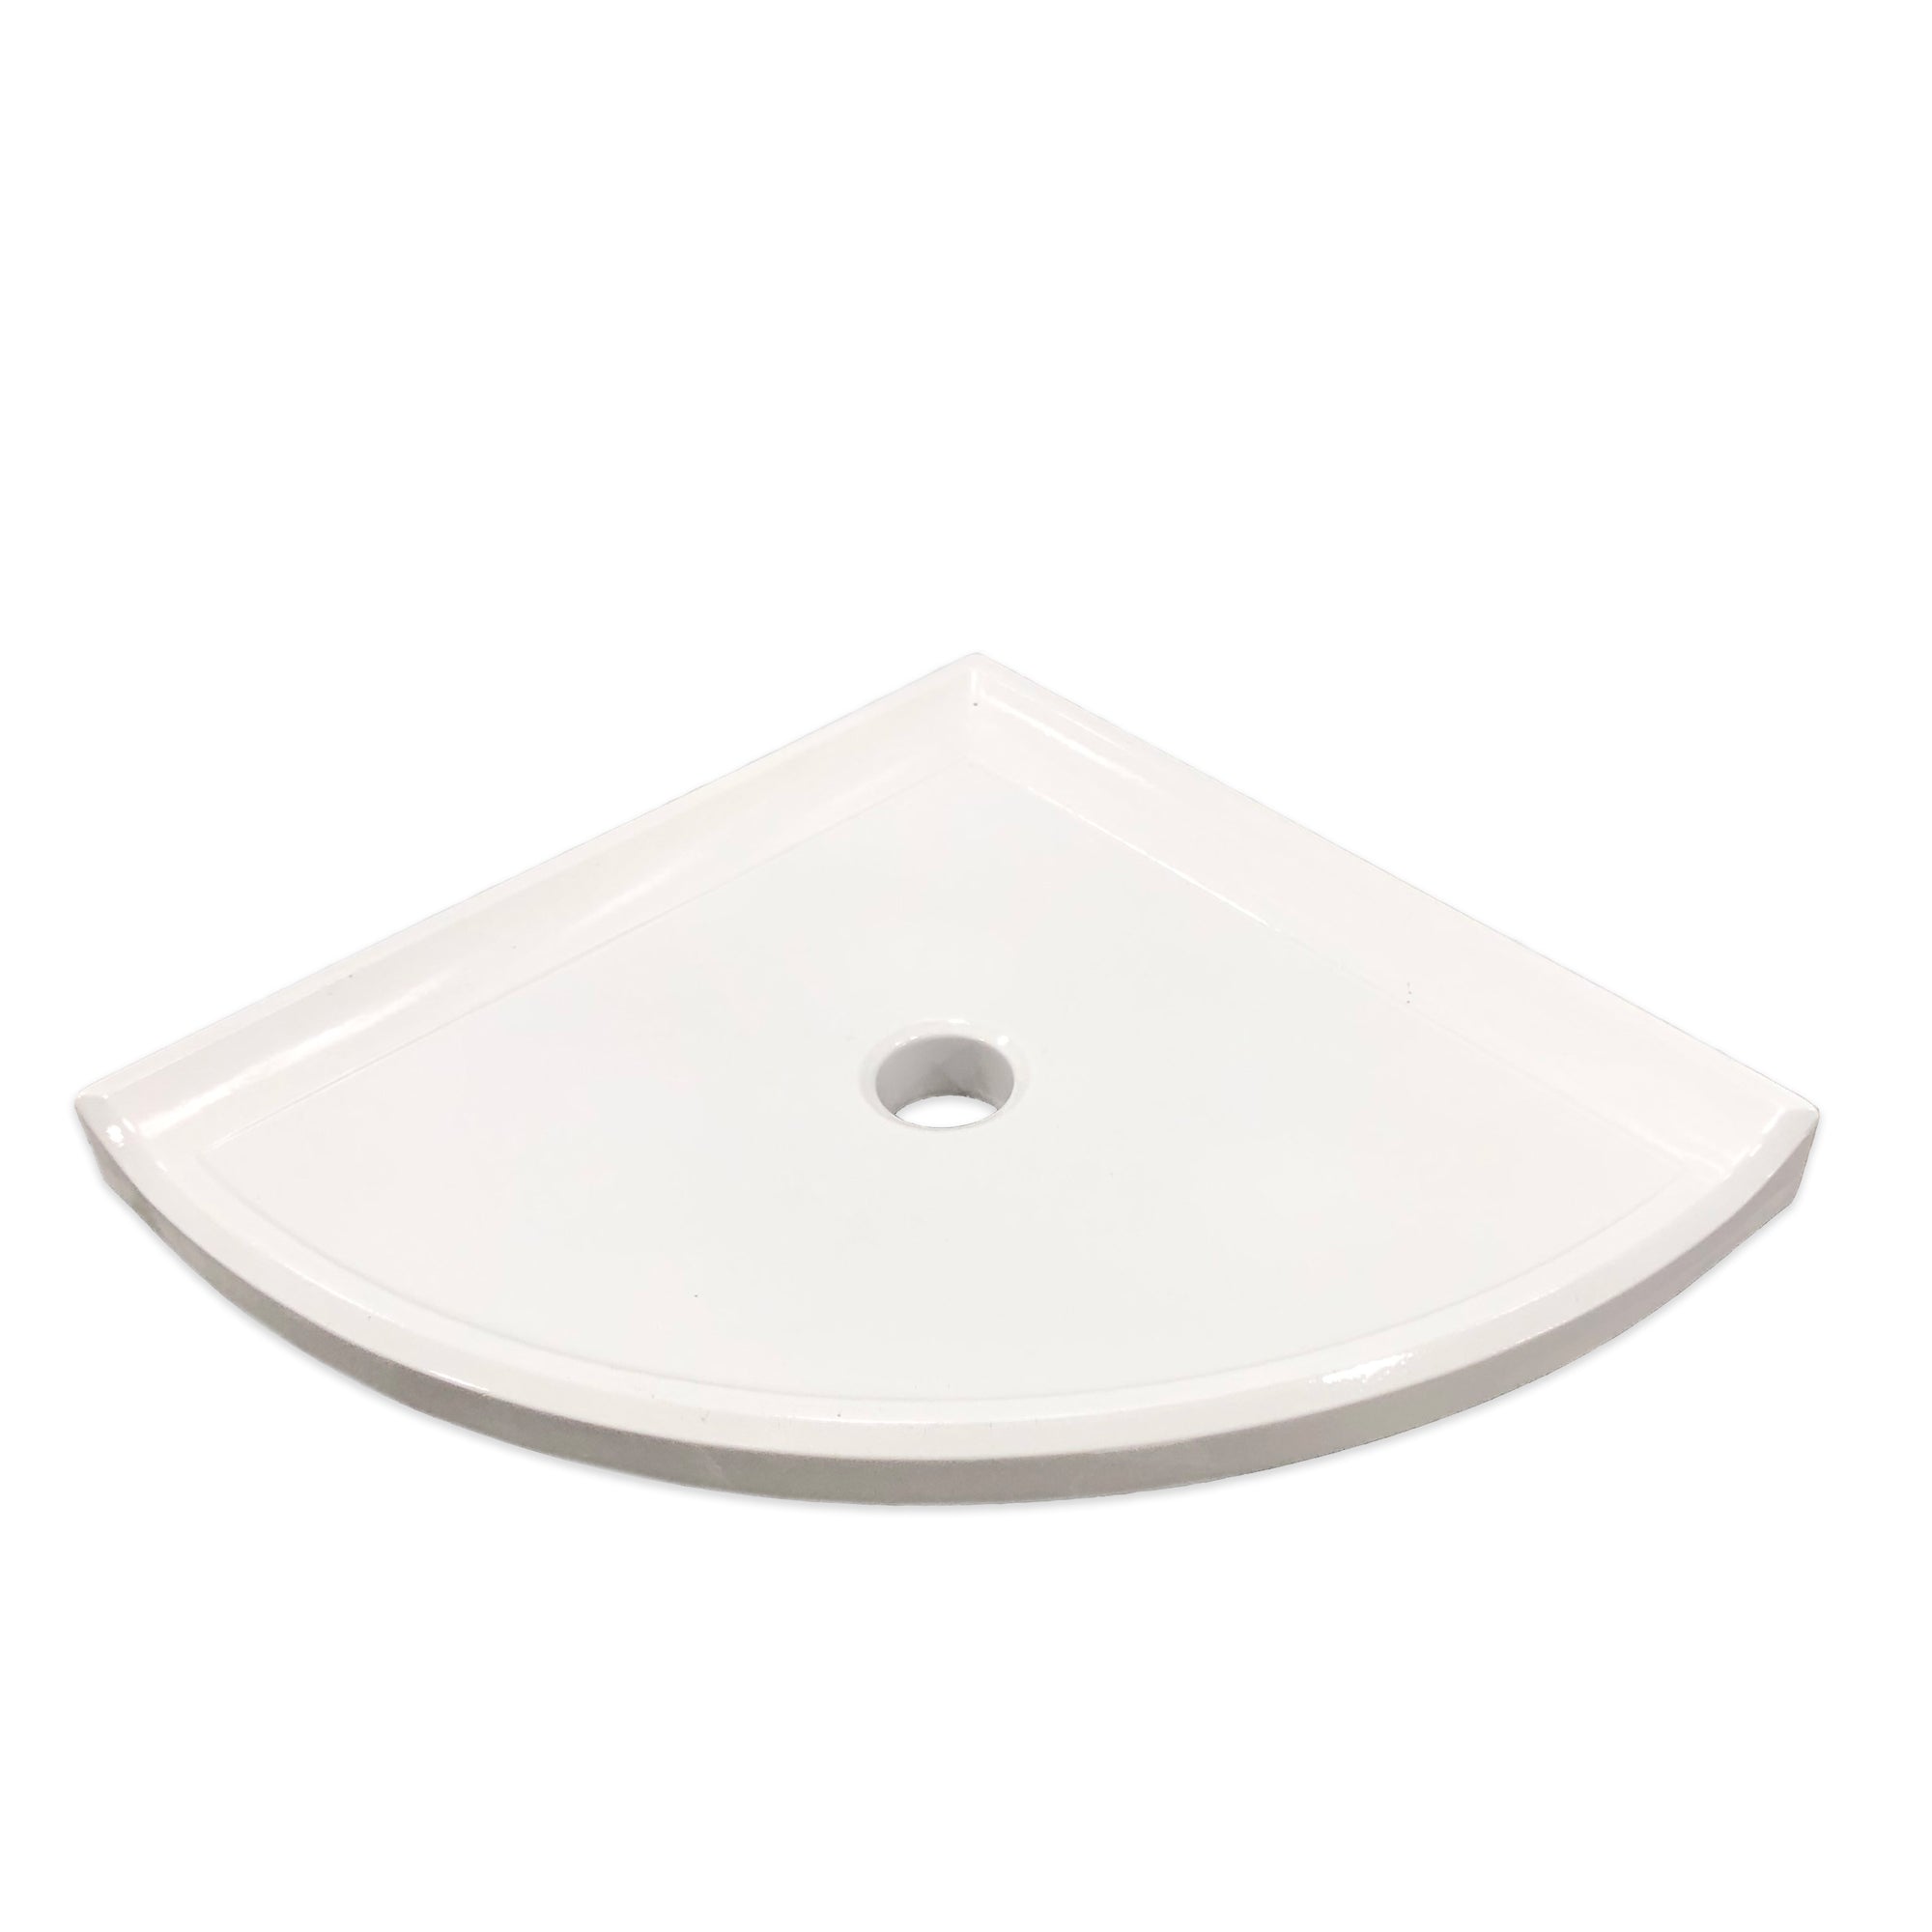 8 Polished White Ceramic Corner Shelf Elegant Shower Shelf with a